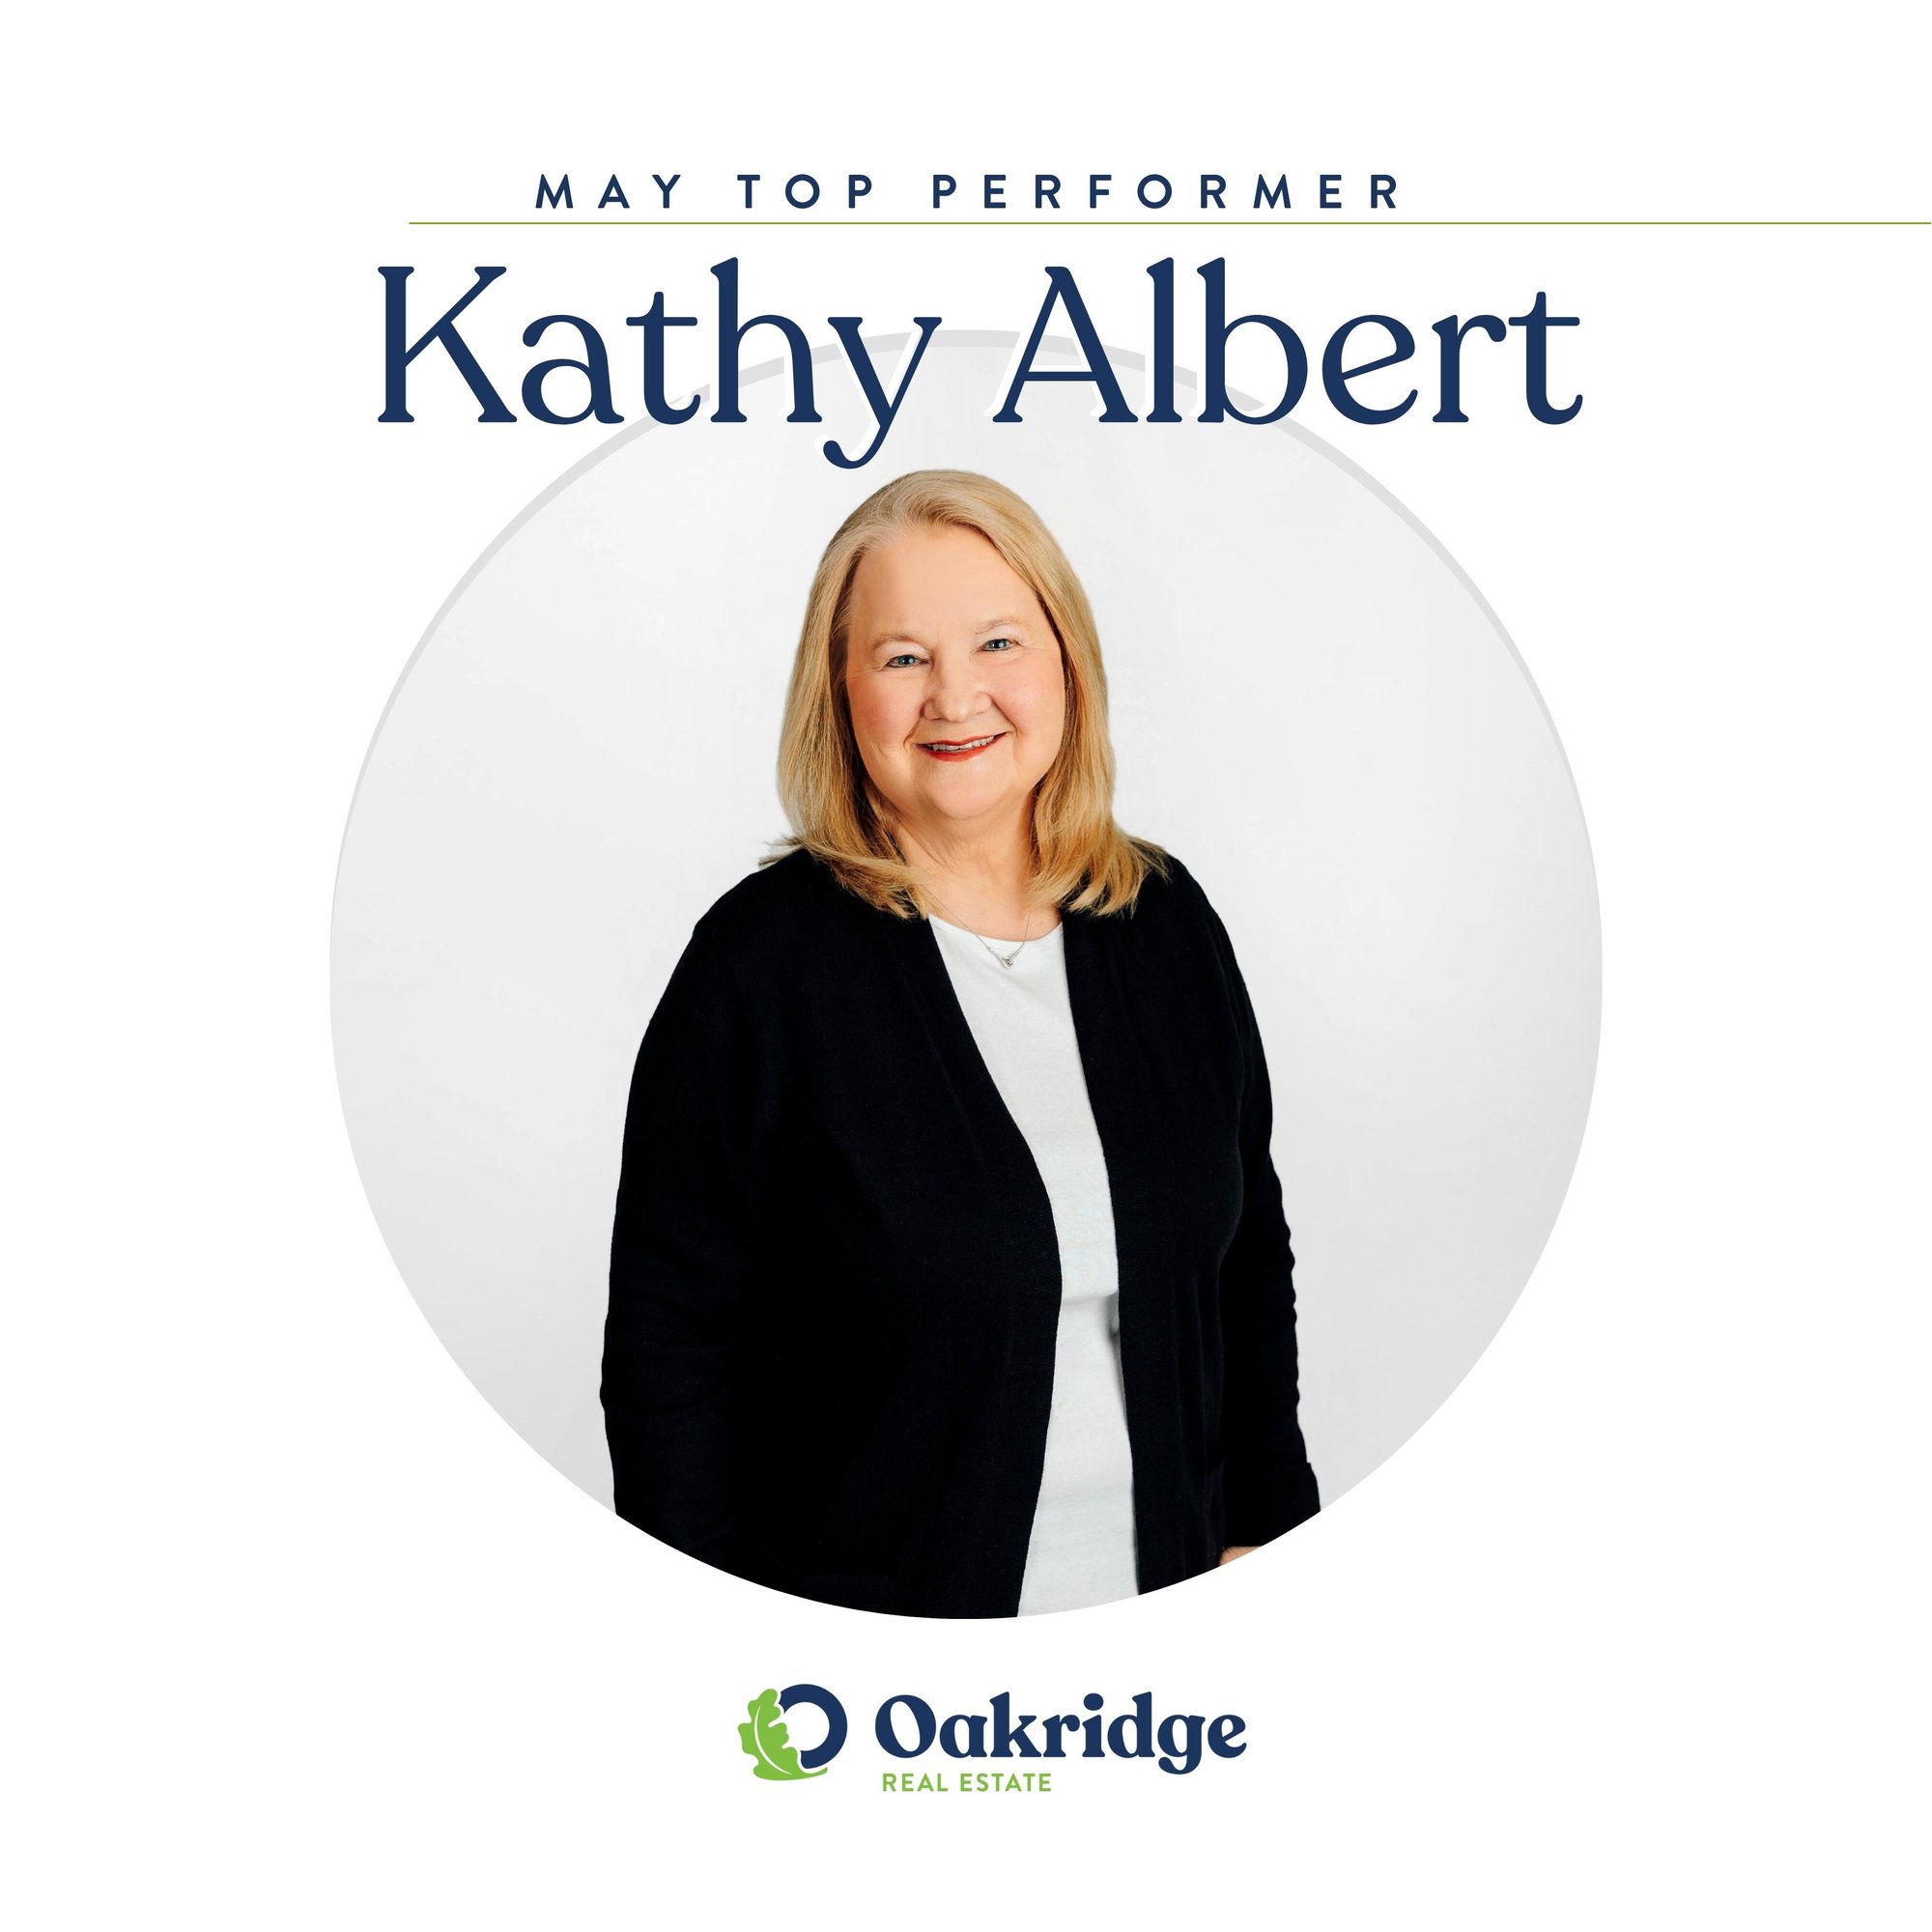 Kathy Albert May Top Performer Oakridge Real Estate